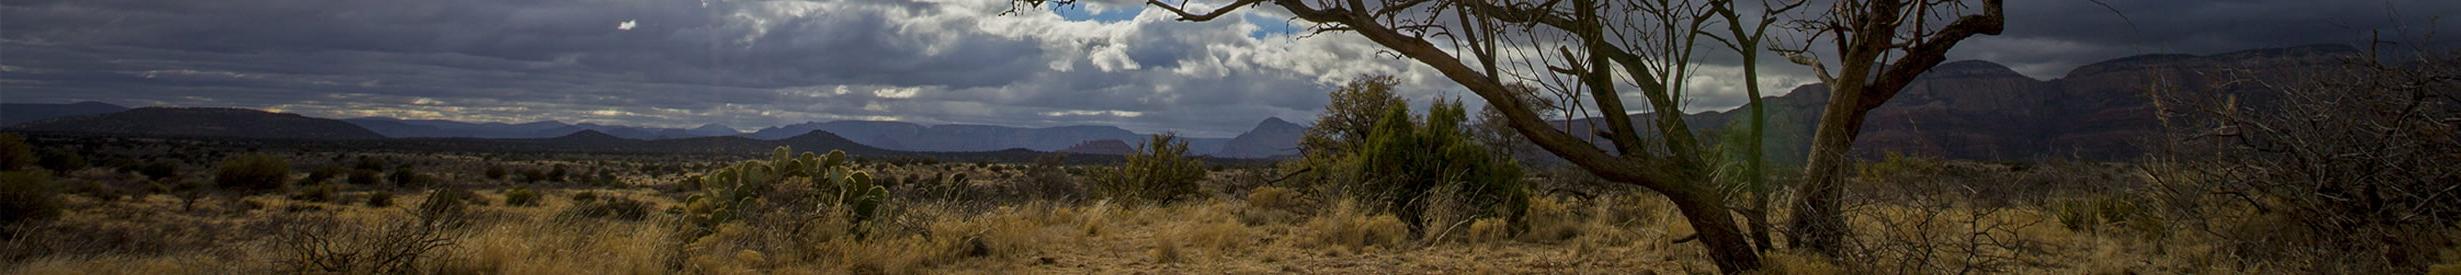 Northern Arizona Landscape Photograph by Larry Hendricks